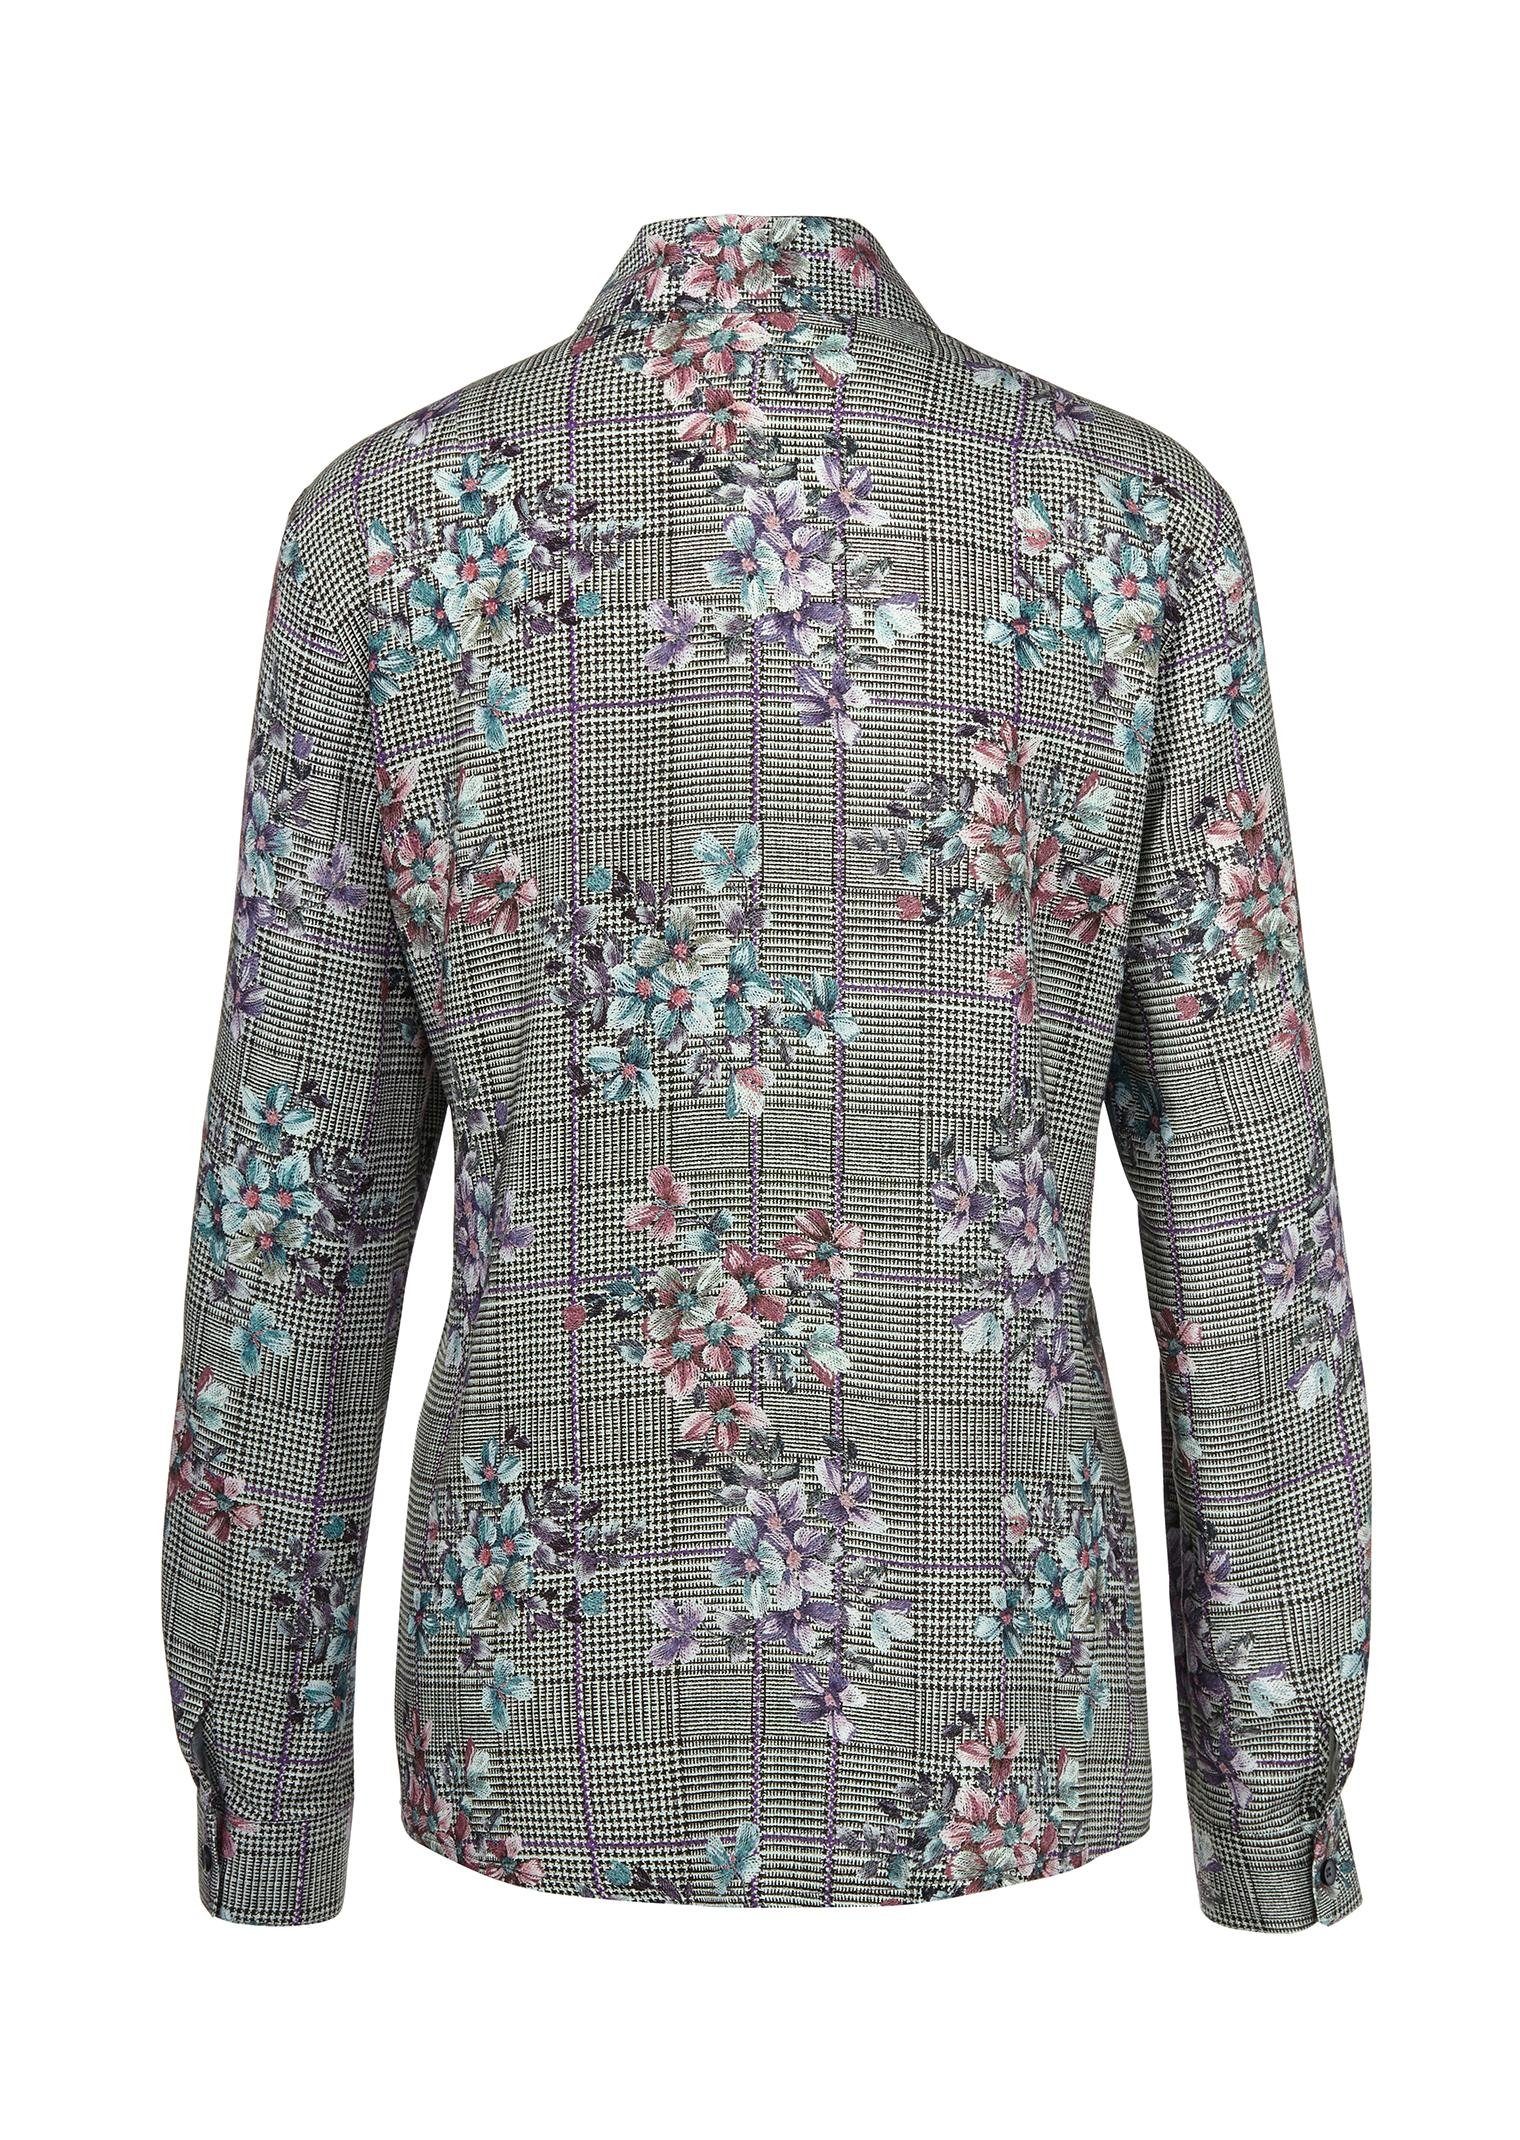 Damen Blusen GOLDNER Druckbluse Moderne Glencheck-Bluse mit edlen Blütendruck